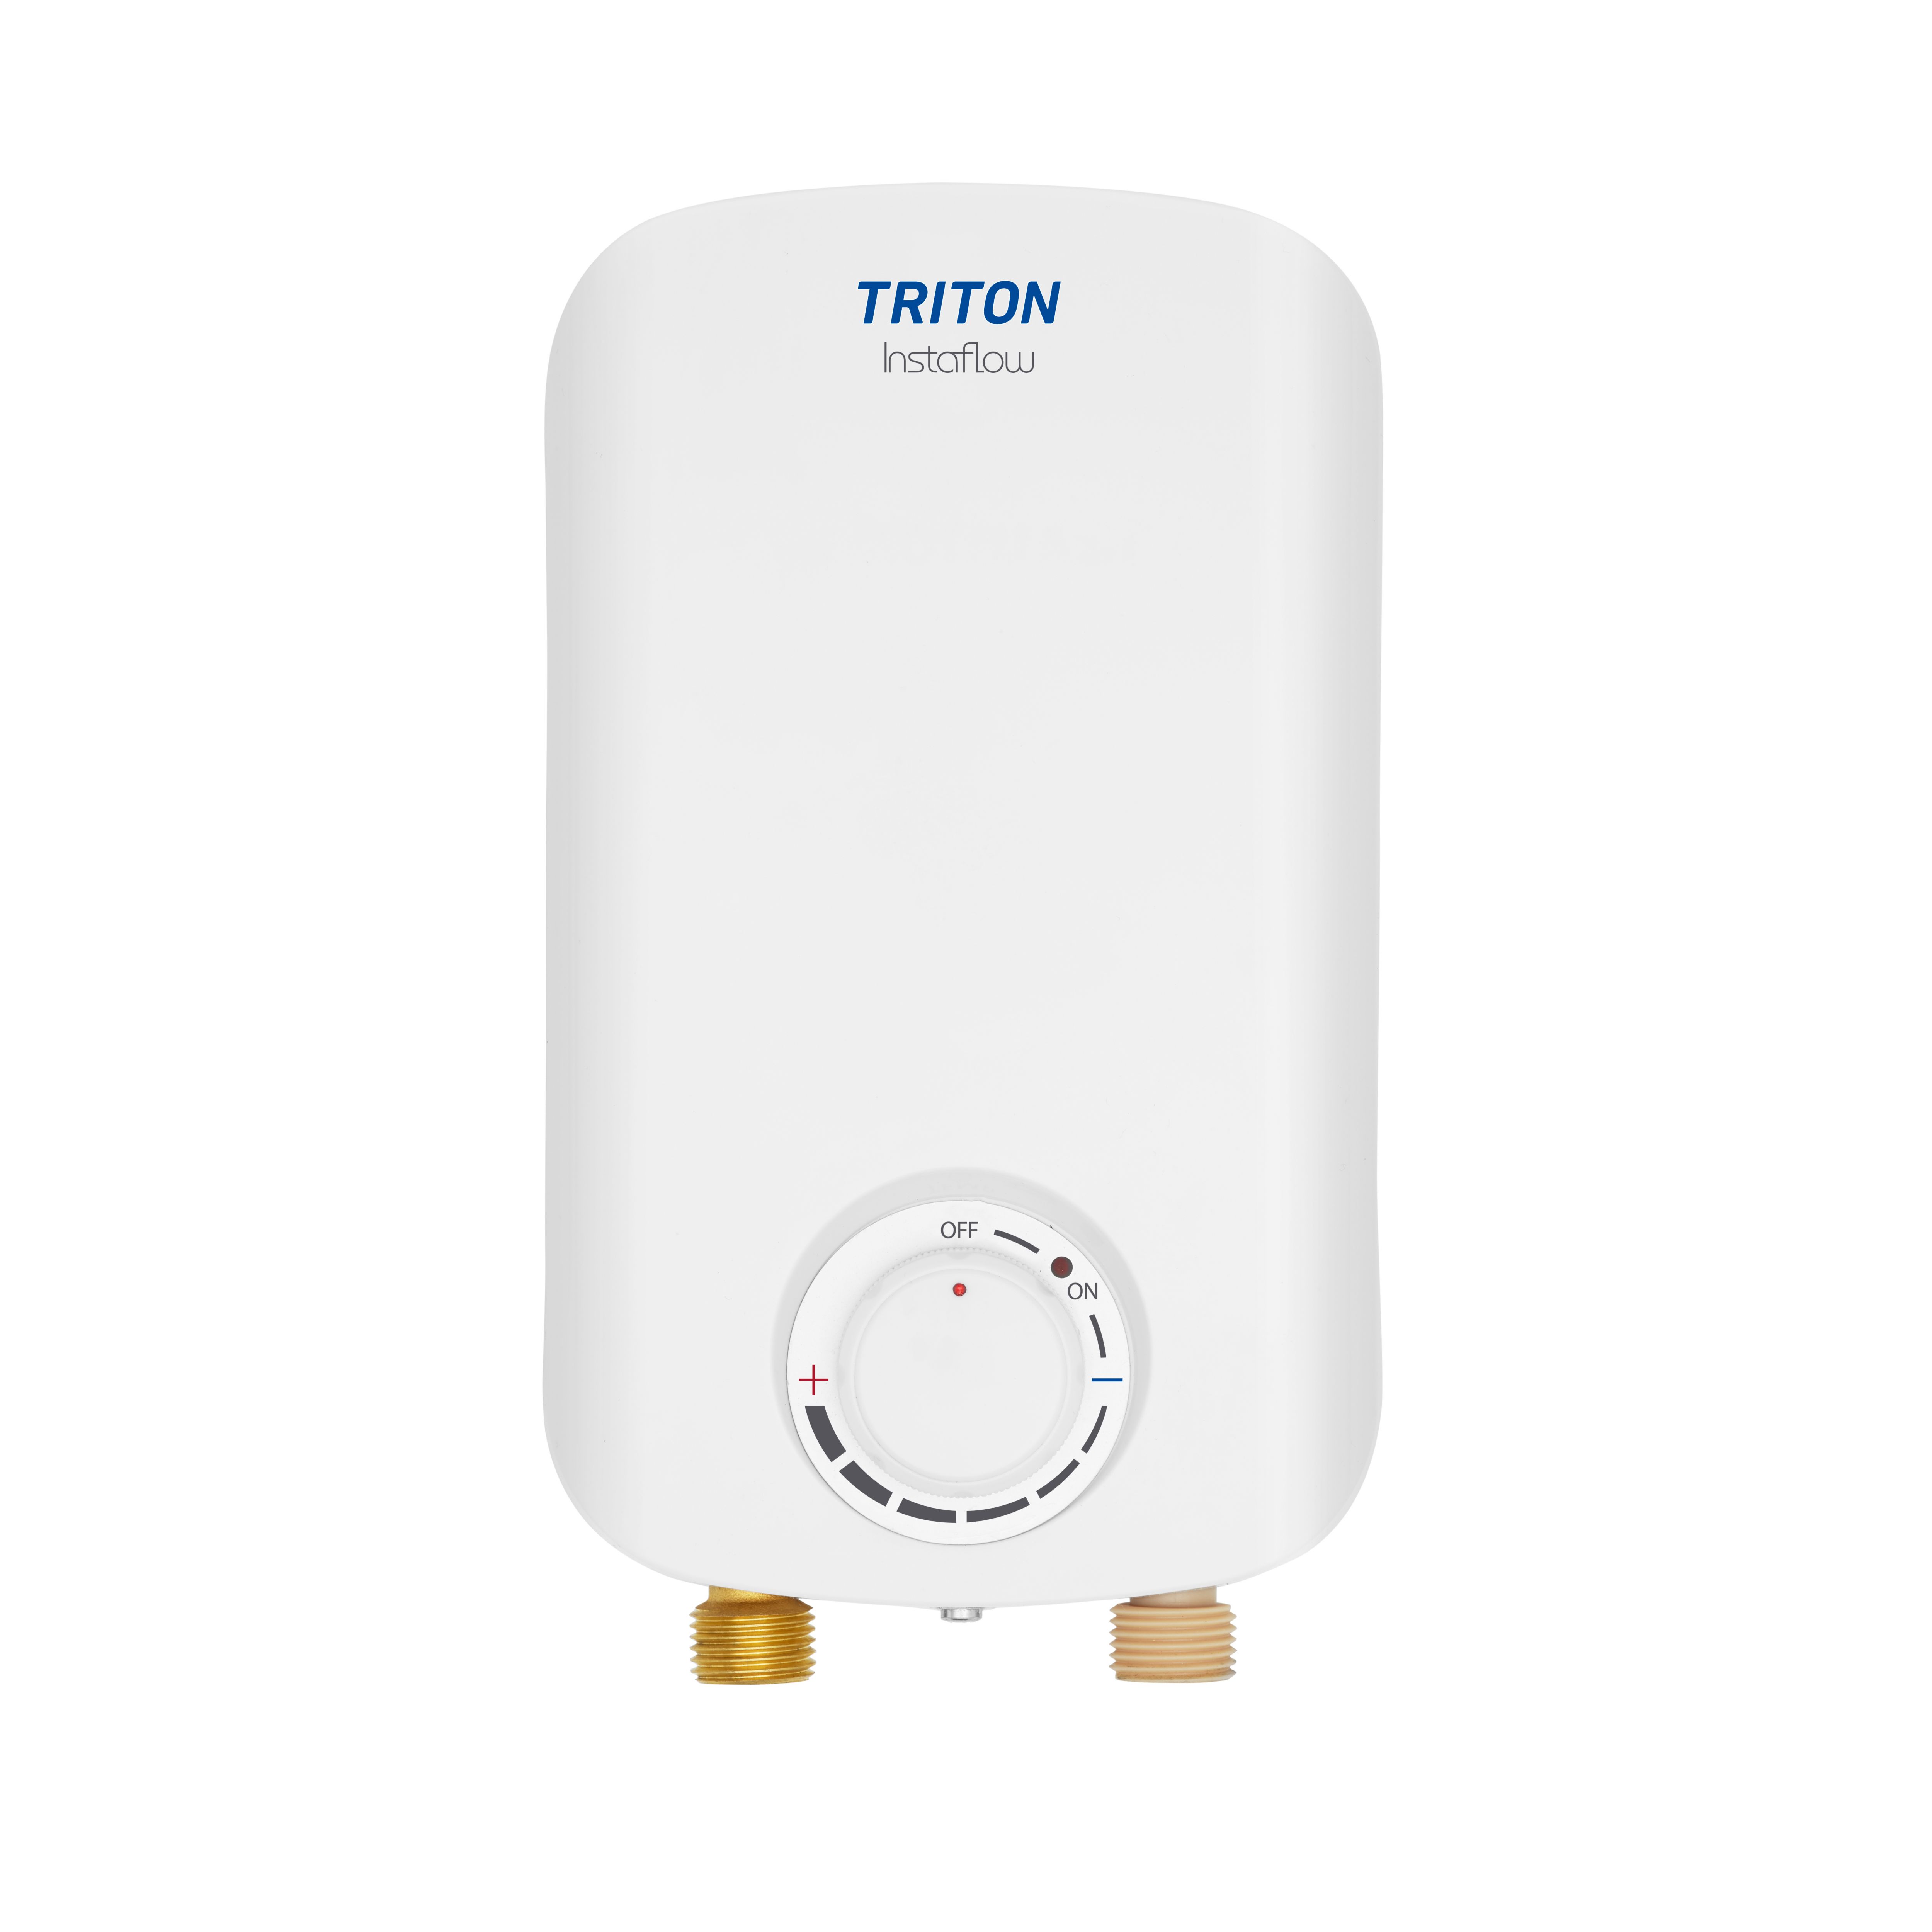 Triton Instaflow Manual 5.4kW Instantaneous water heater